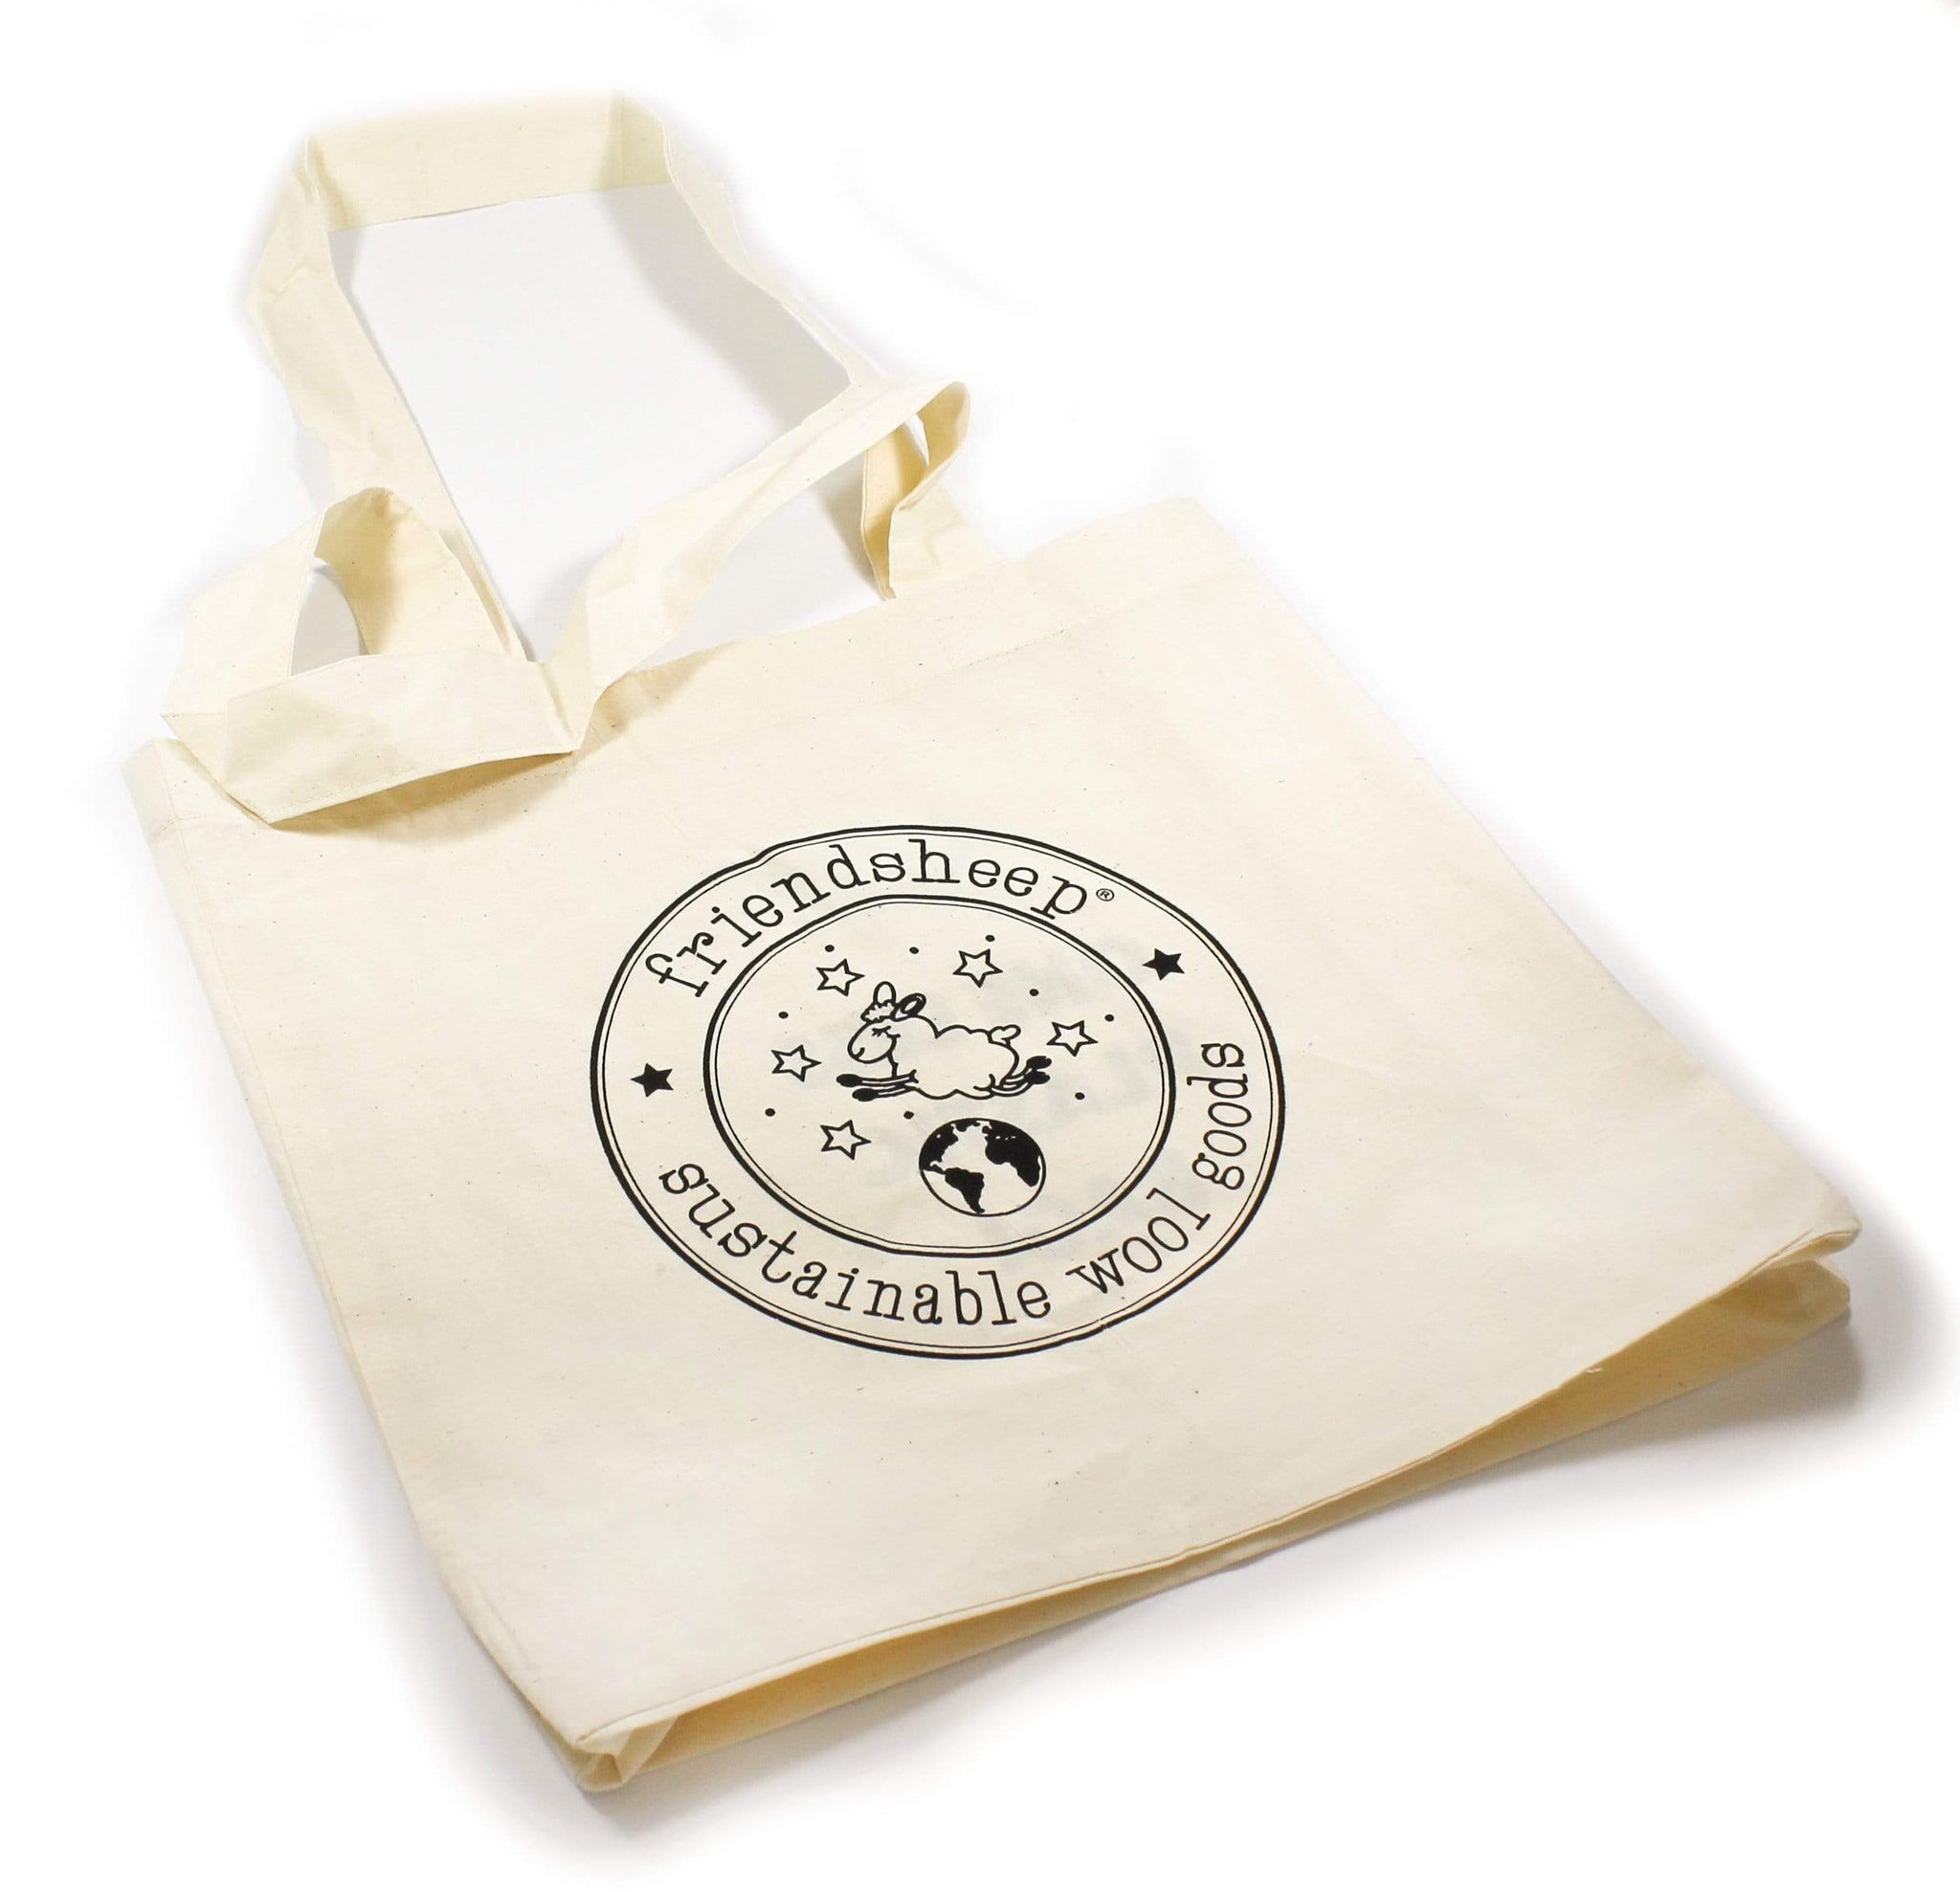 One Less Plastic Bag! - Organic Cotton Tote